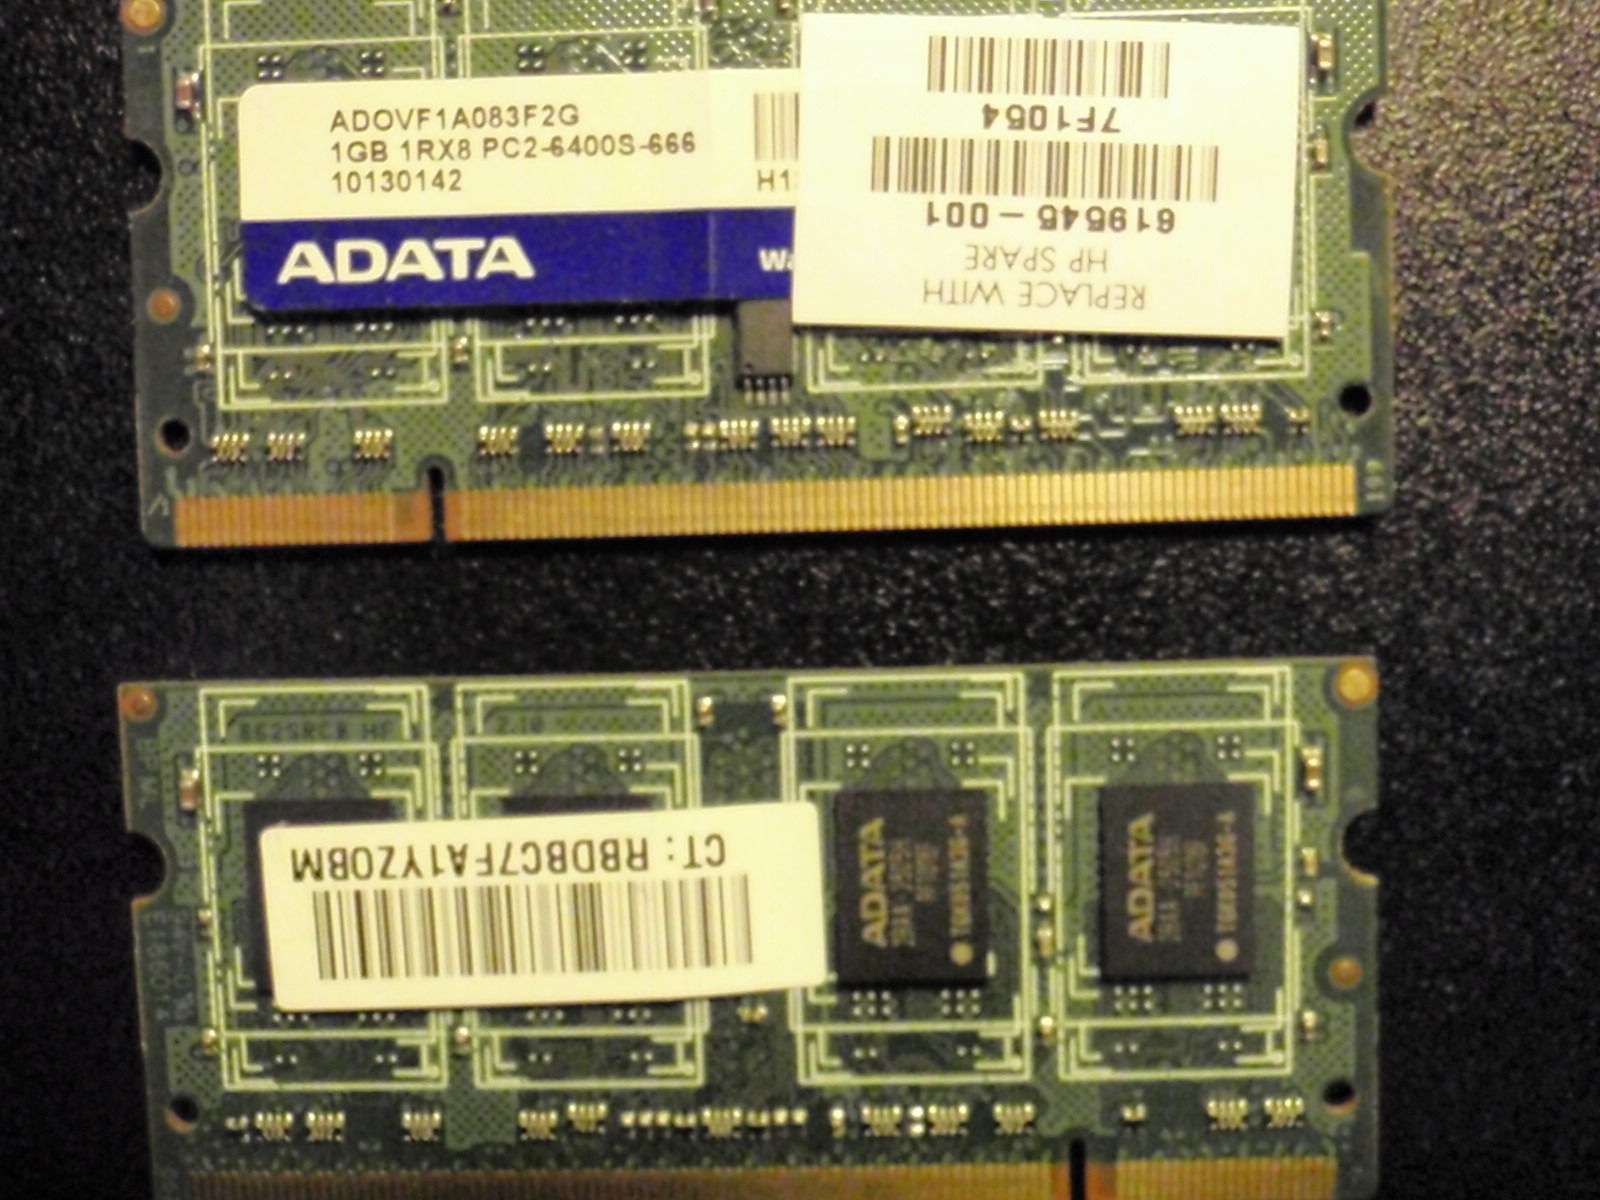 2GB 2 x 1GB PC3200 HP dc5000 dc7100 dx2000 dx5150 dx6100 Desktop Memory RAM